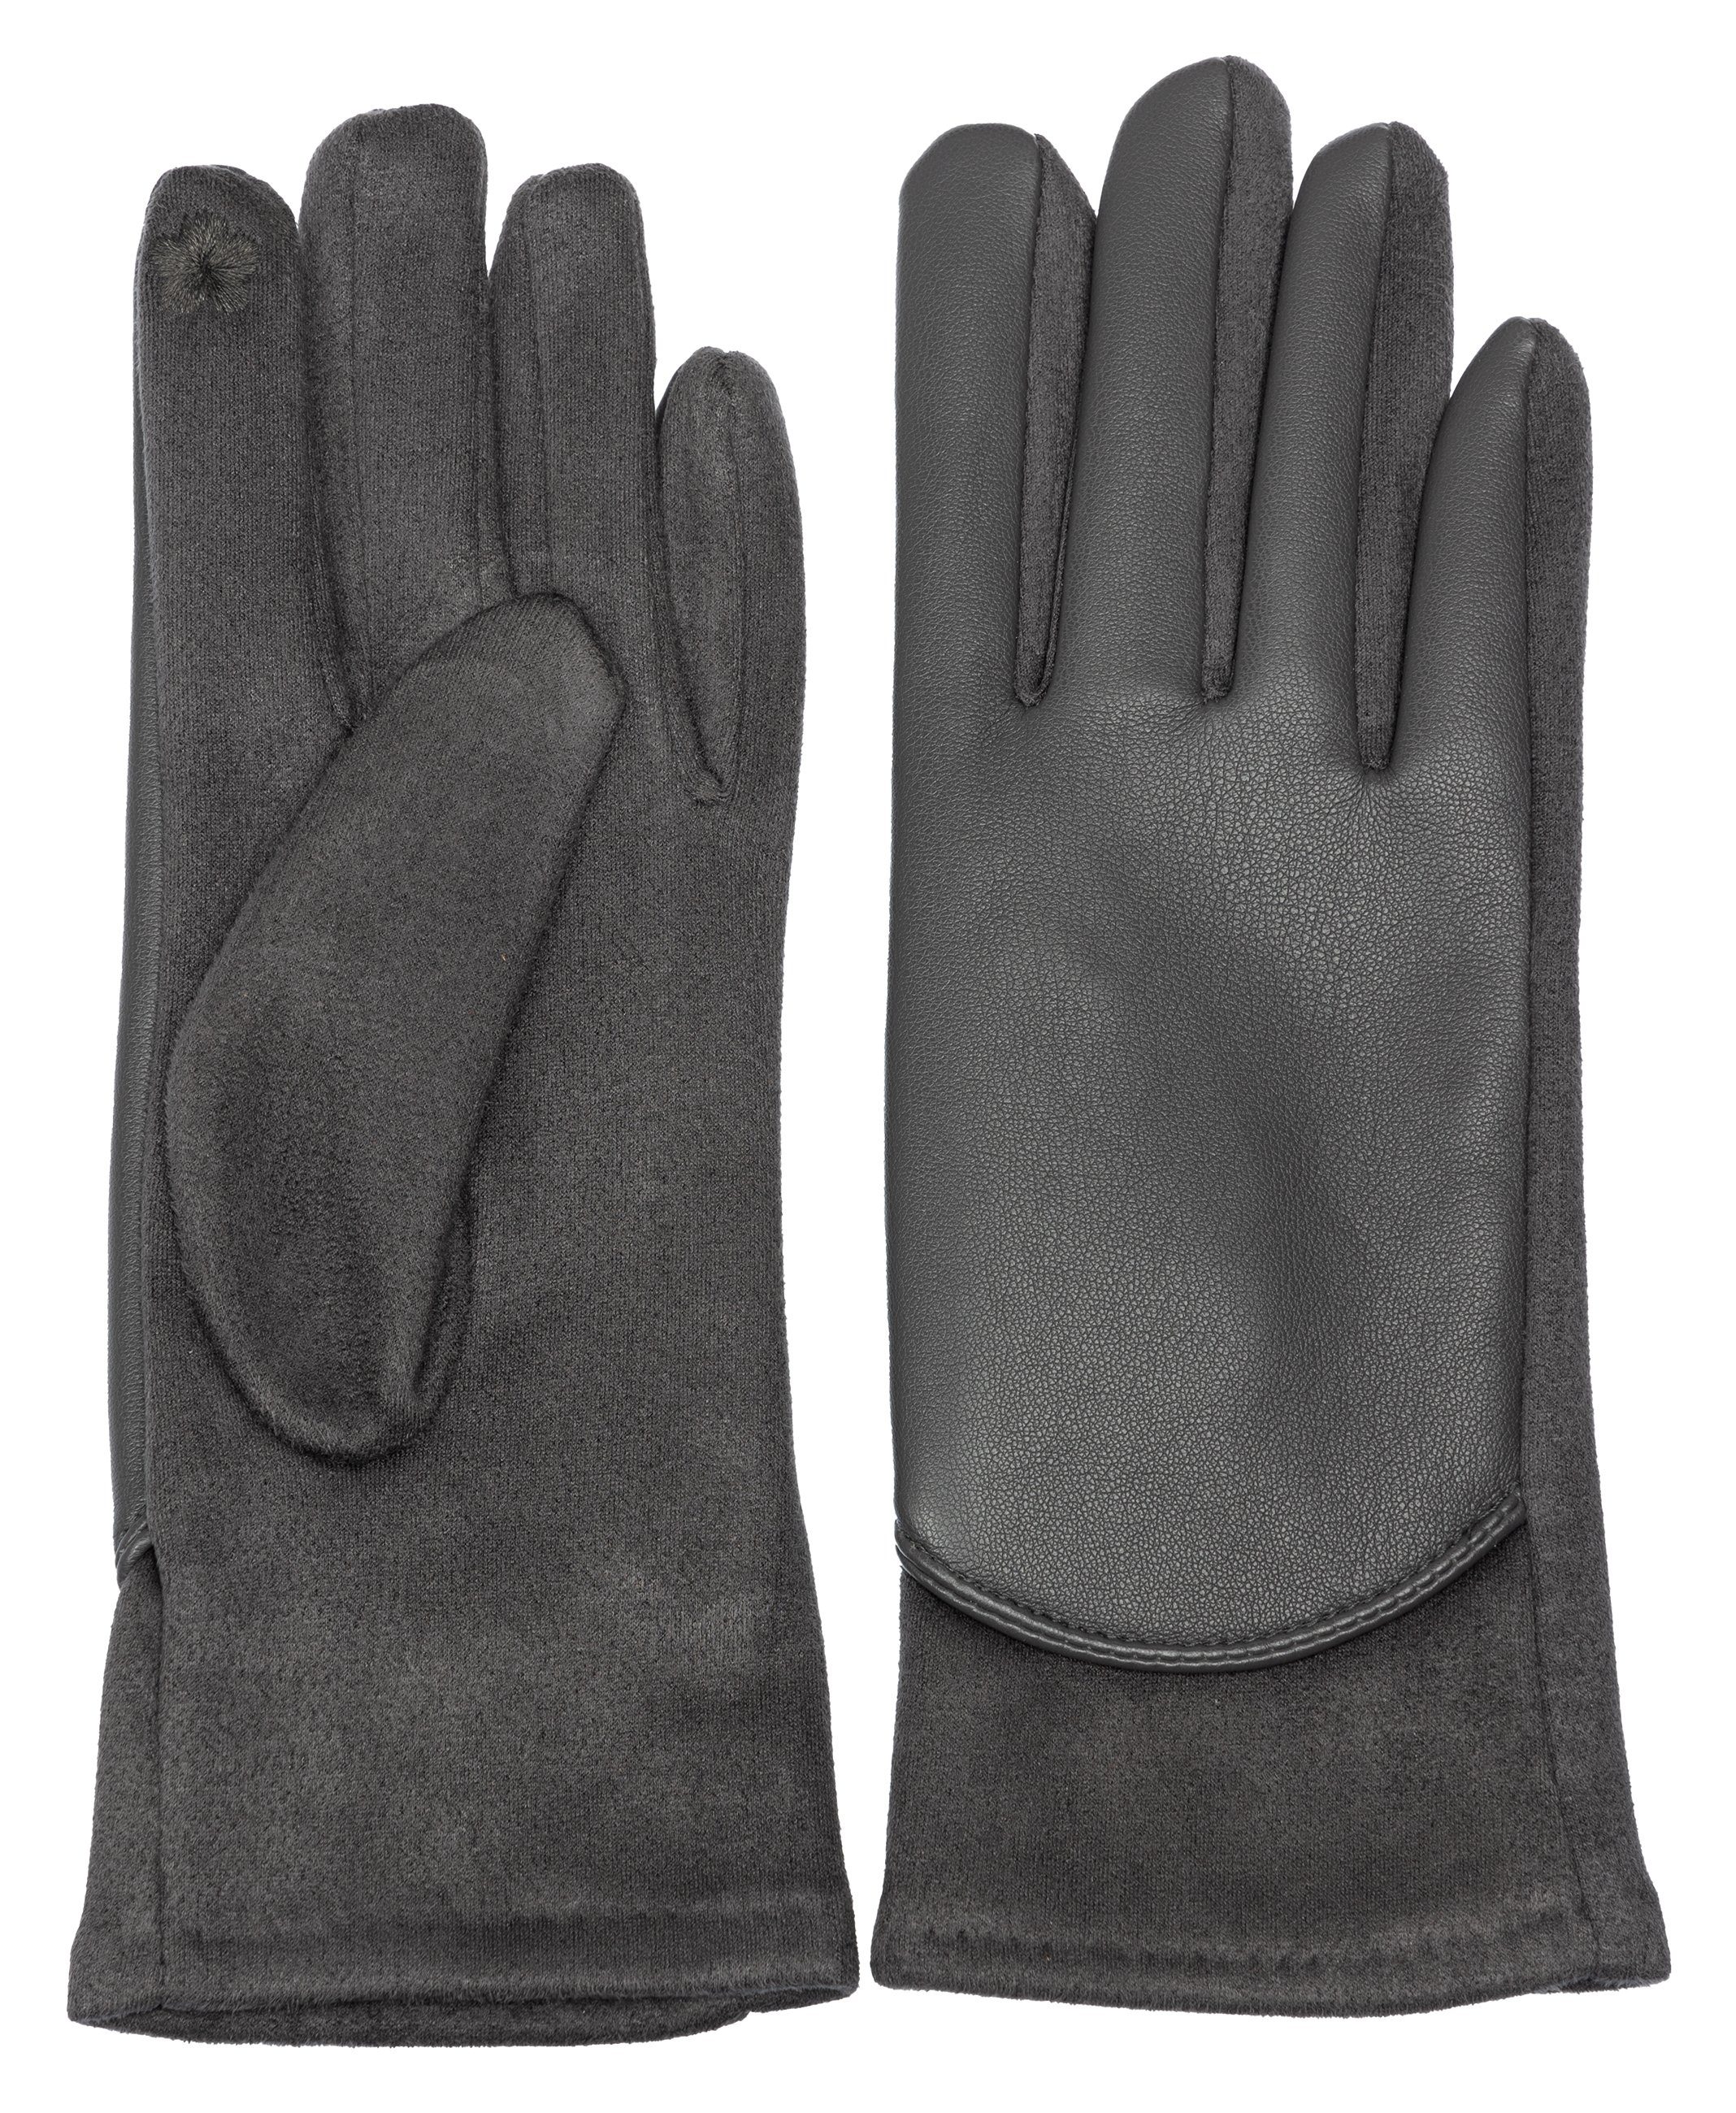 Handschuhe elegante GLV016 dunkelgrau Damen Caspar uni Strickhandschuhe klassisch